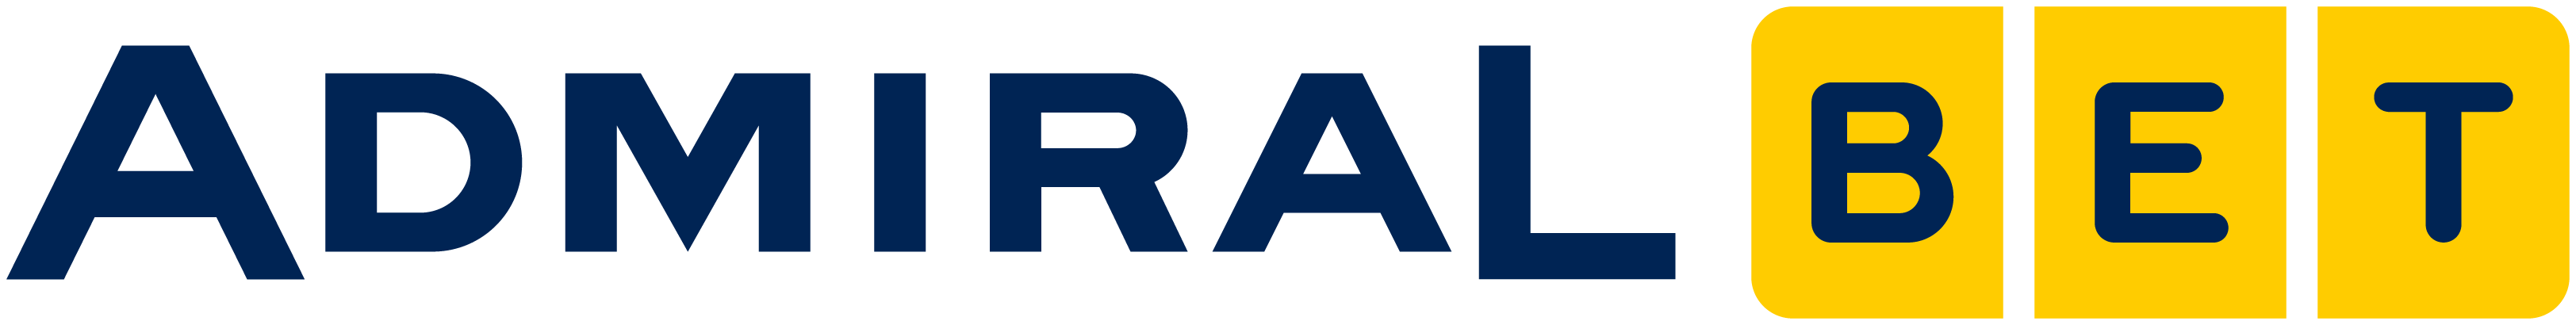 AdmiralBet logo